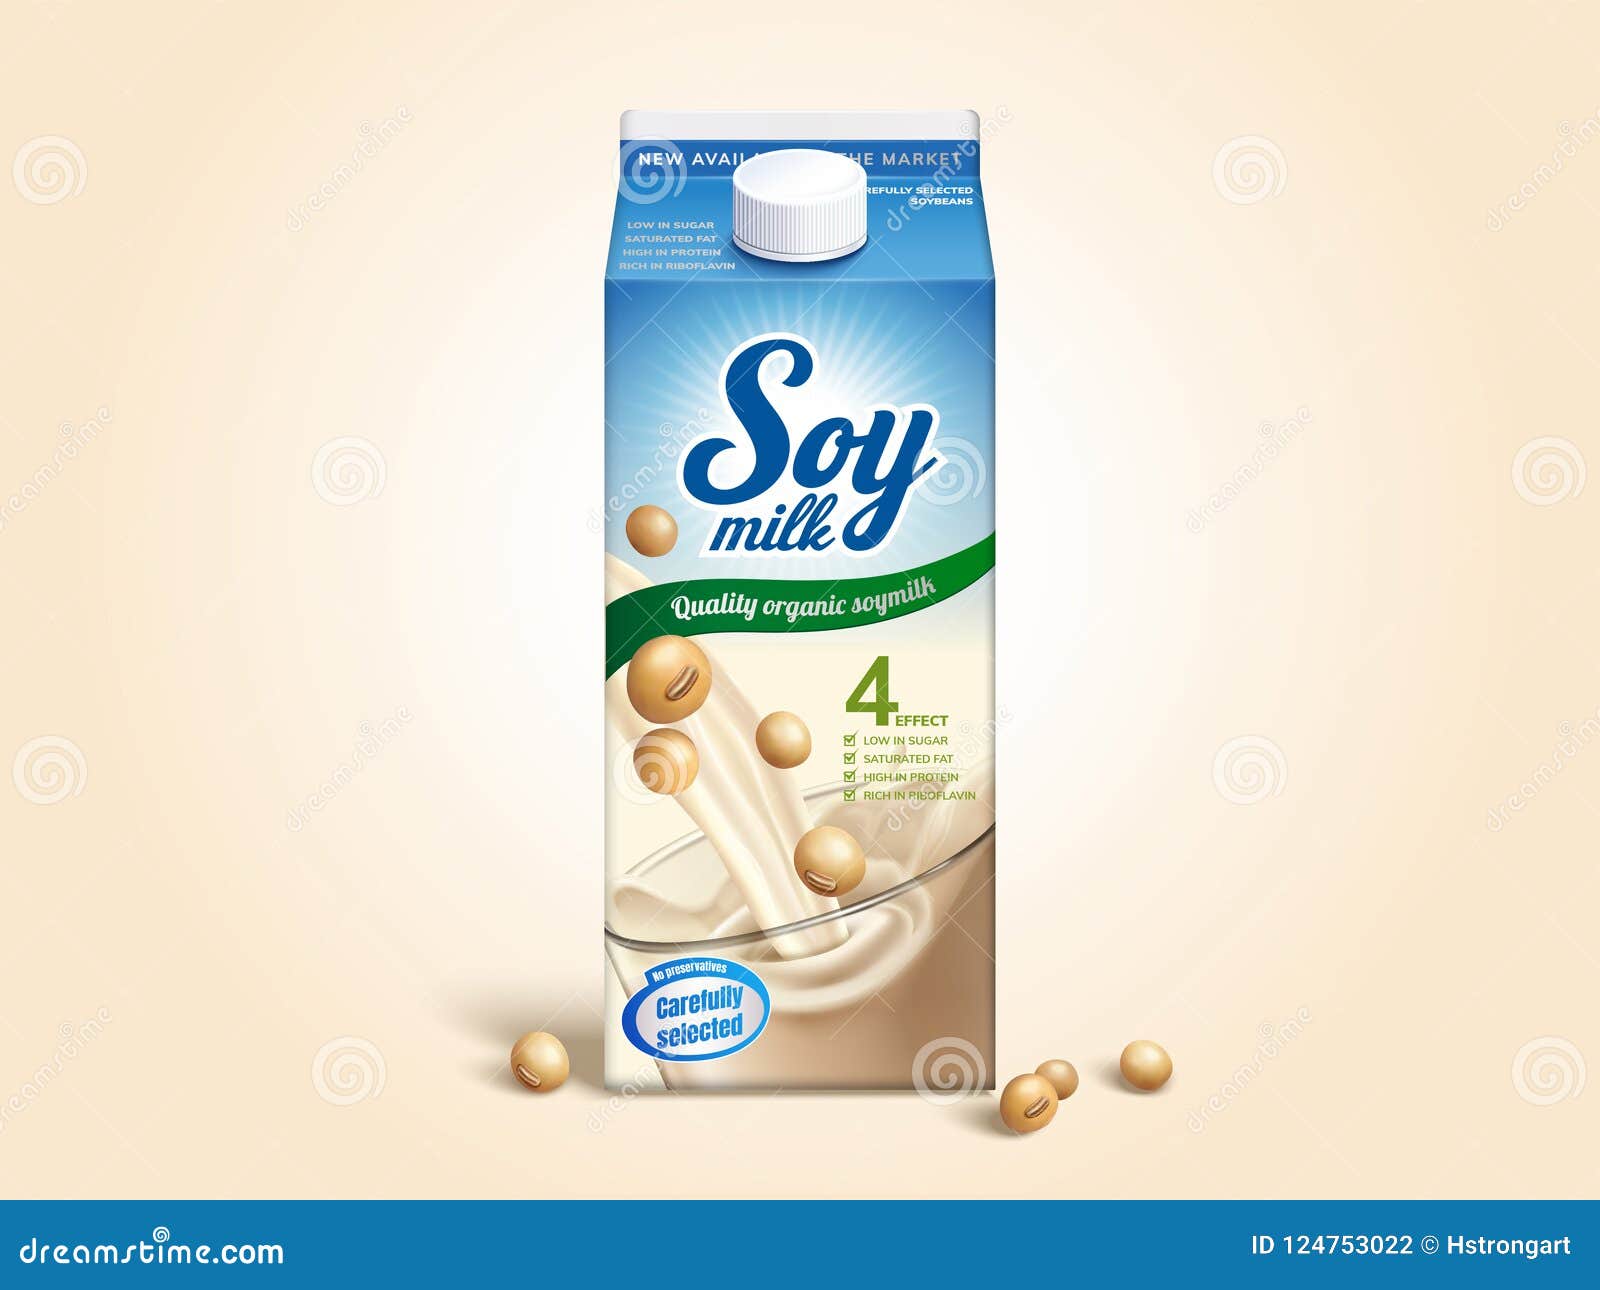 soy milk carton package